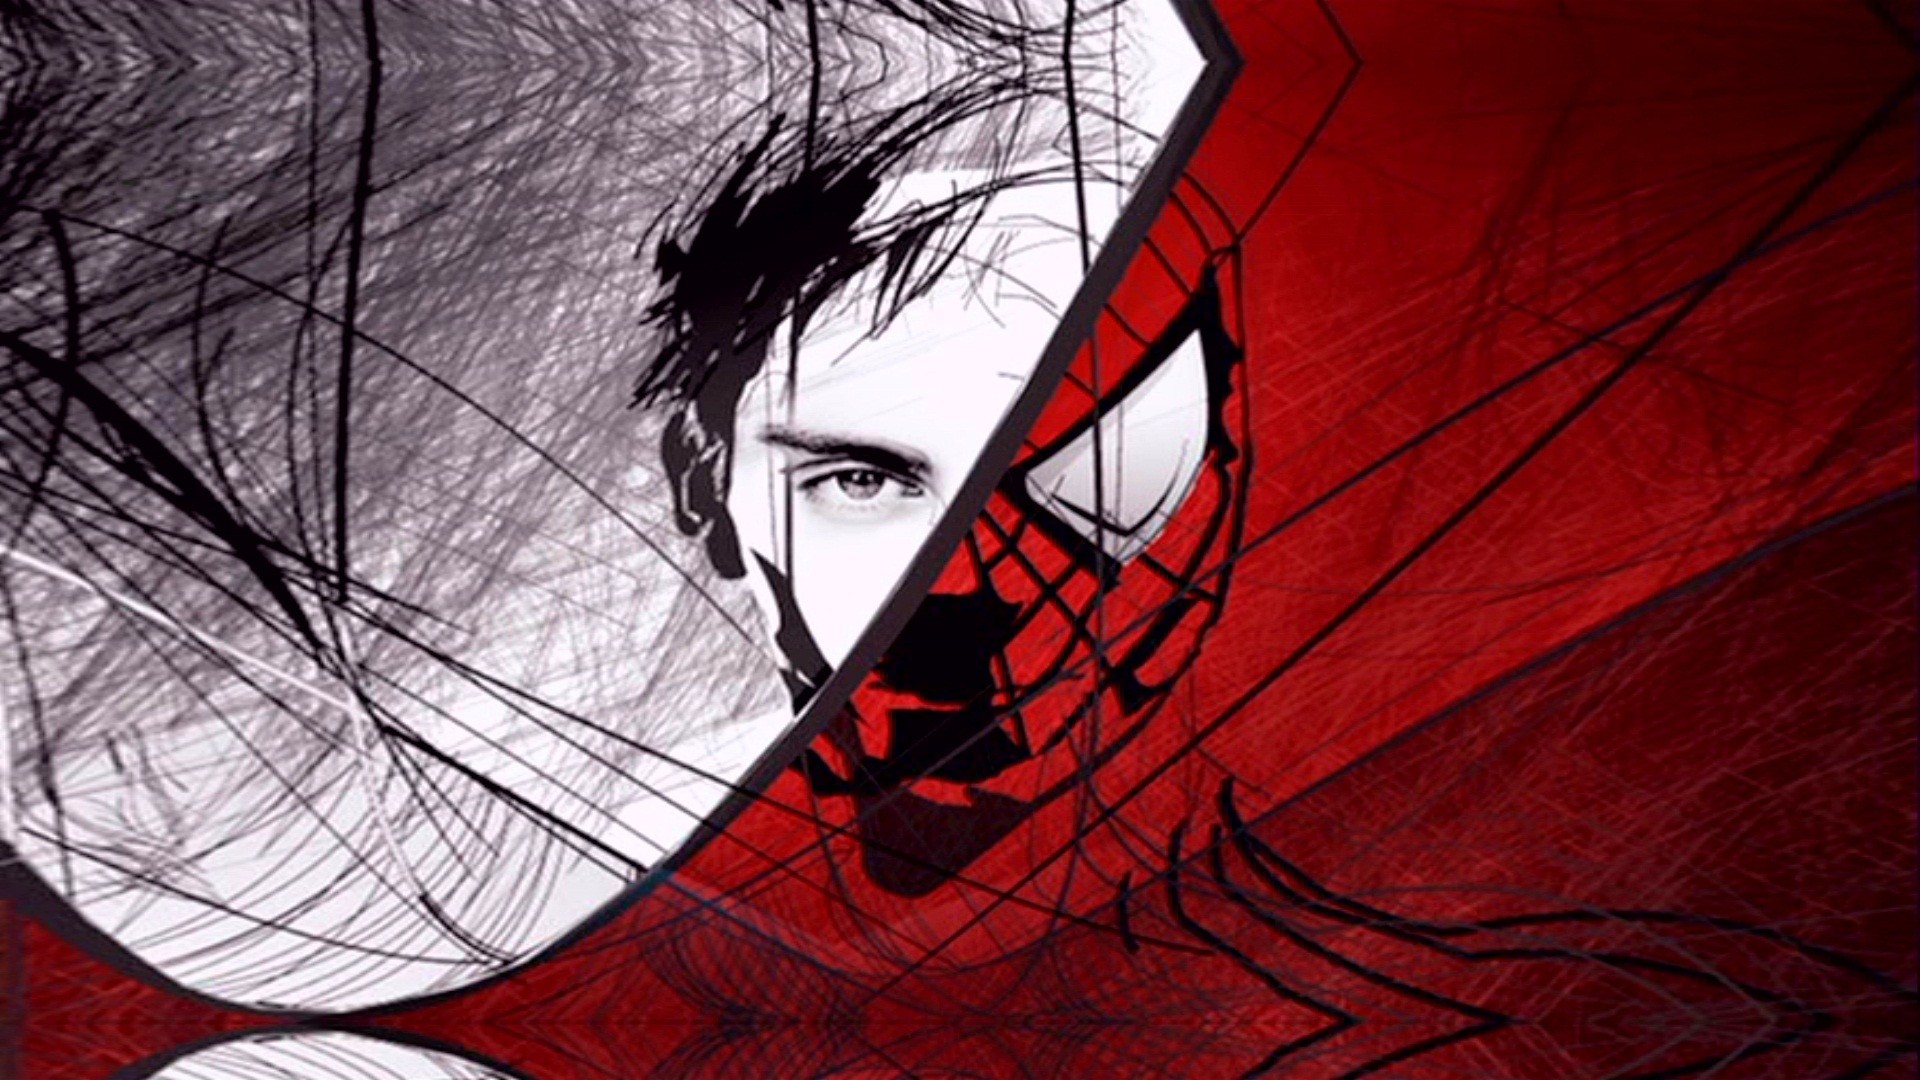 Spider-man wallpaper ·① Download free stunning full HD ...